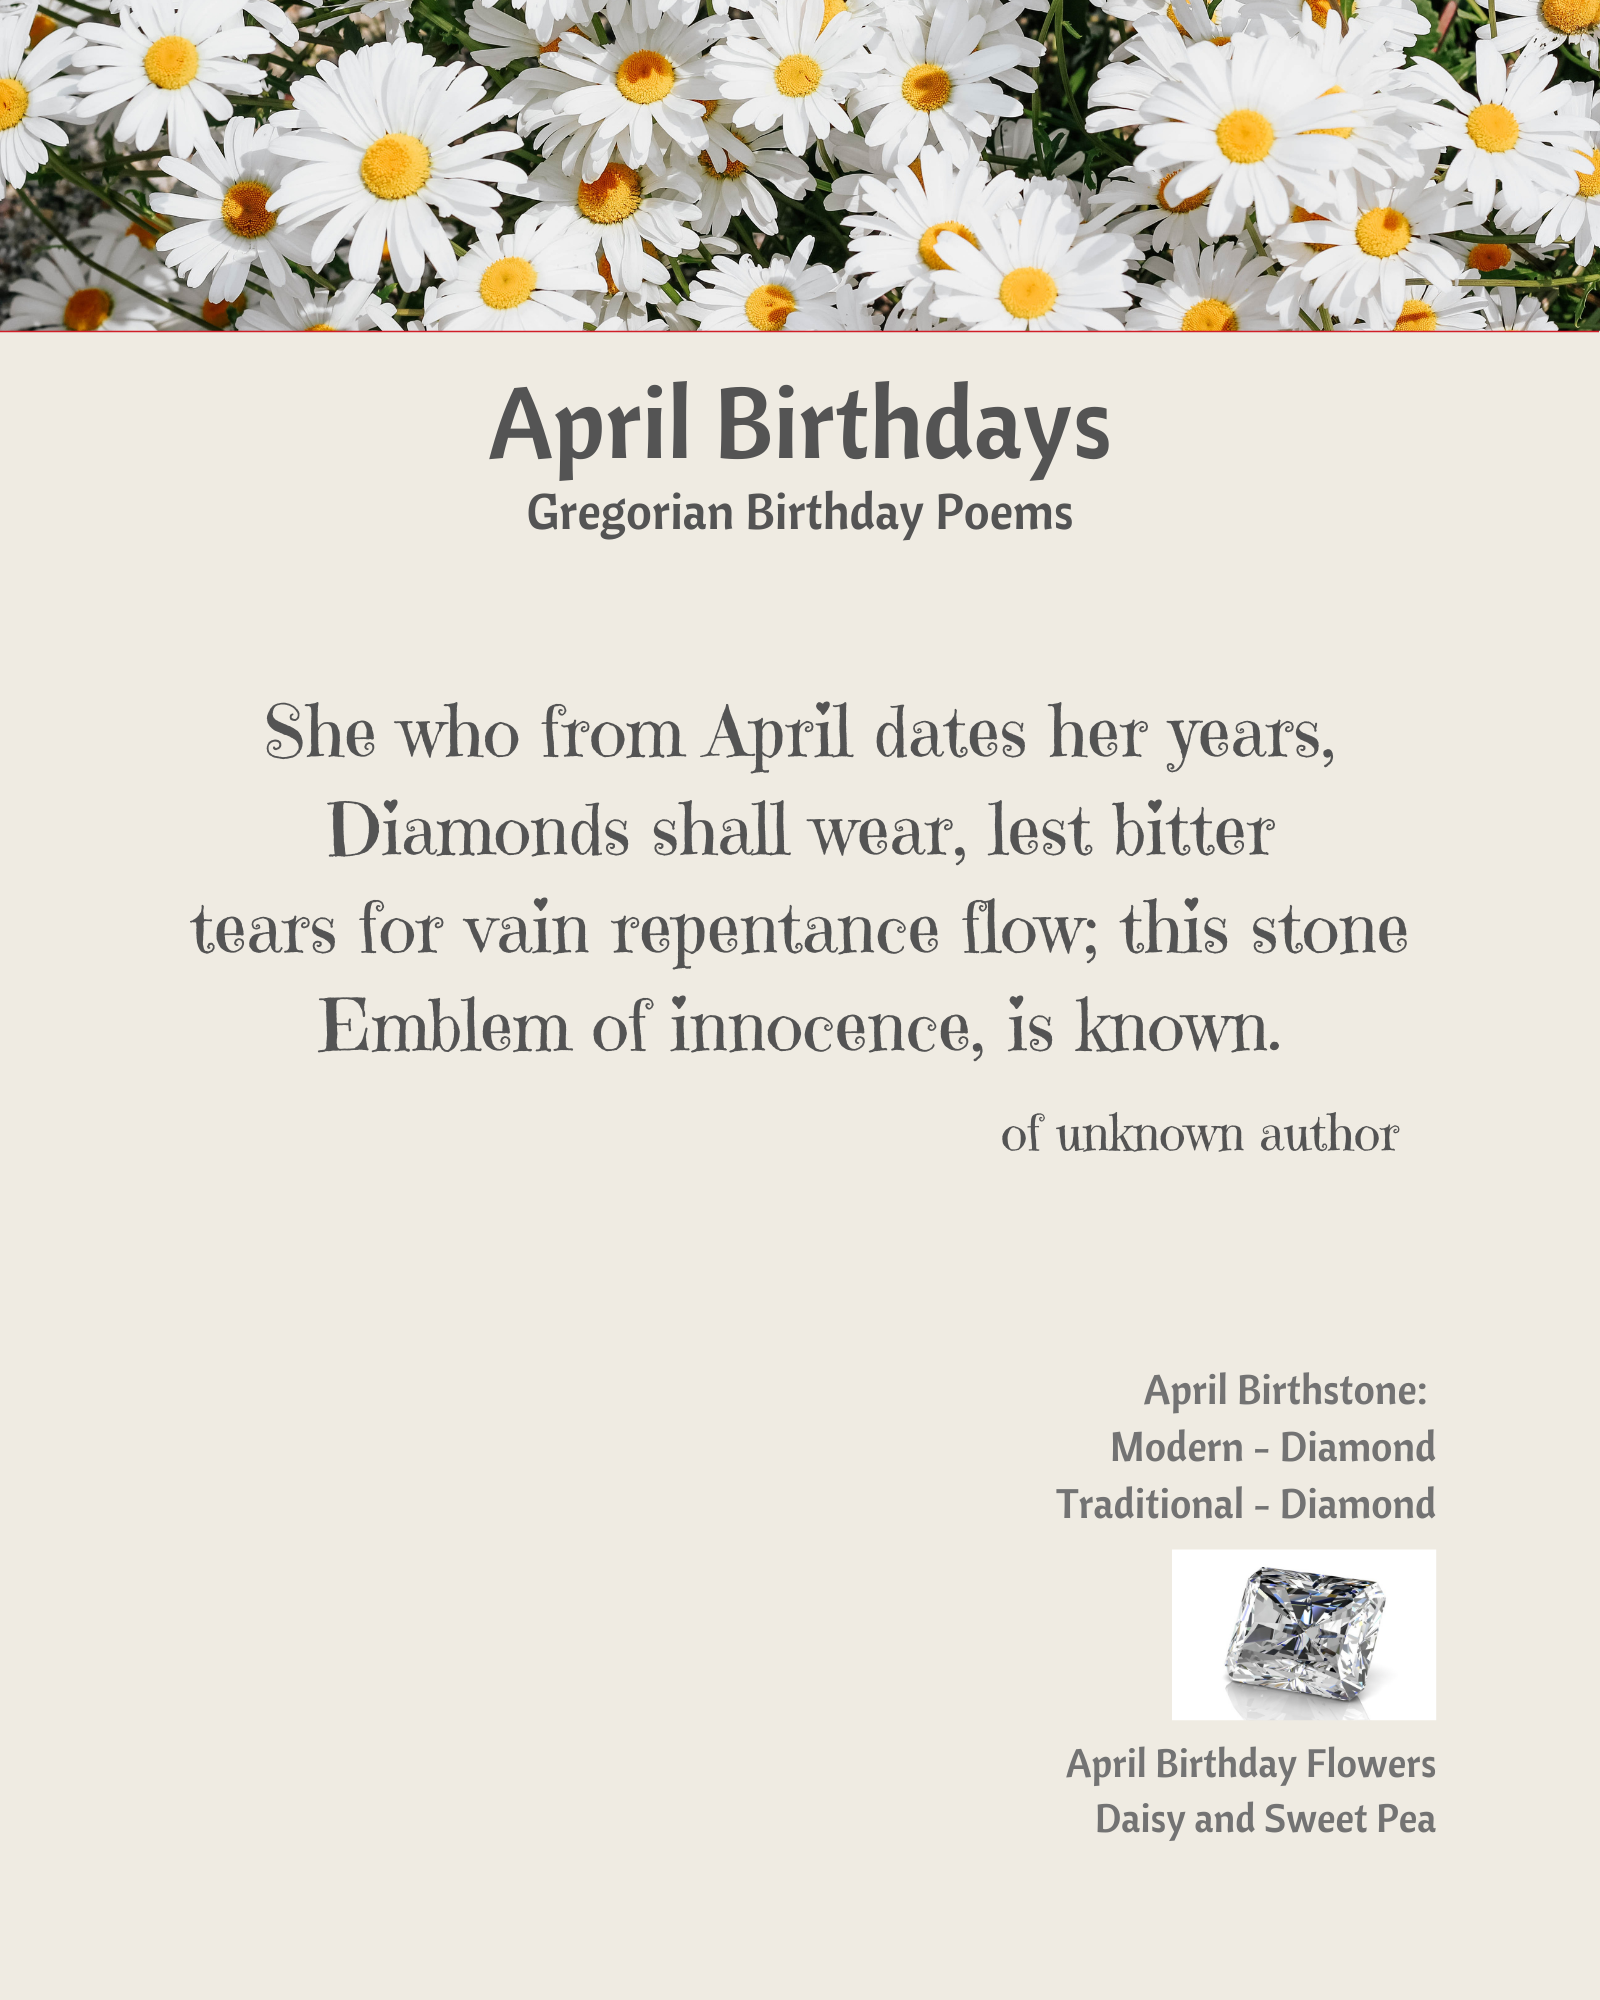 April Birthday Poem